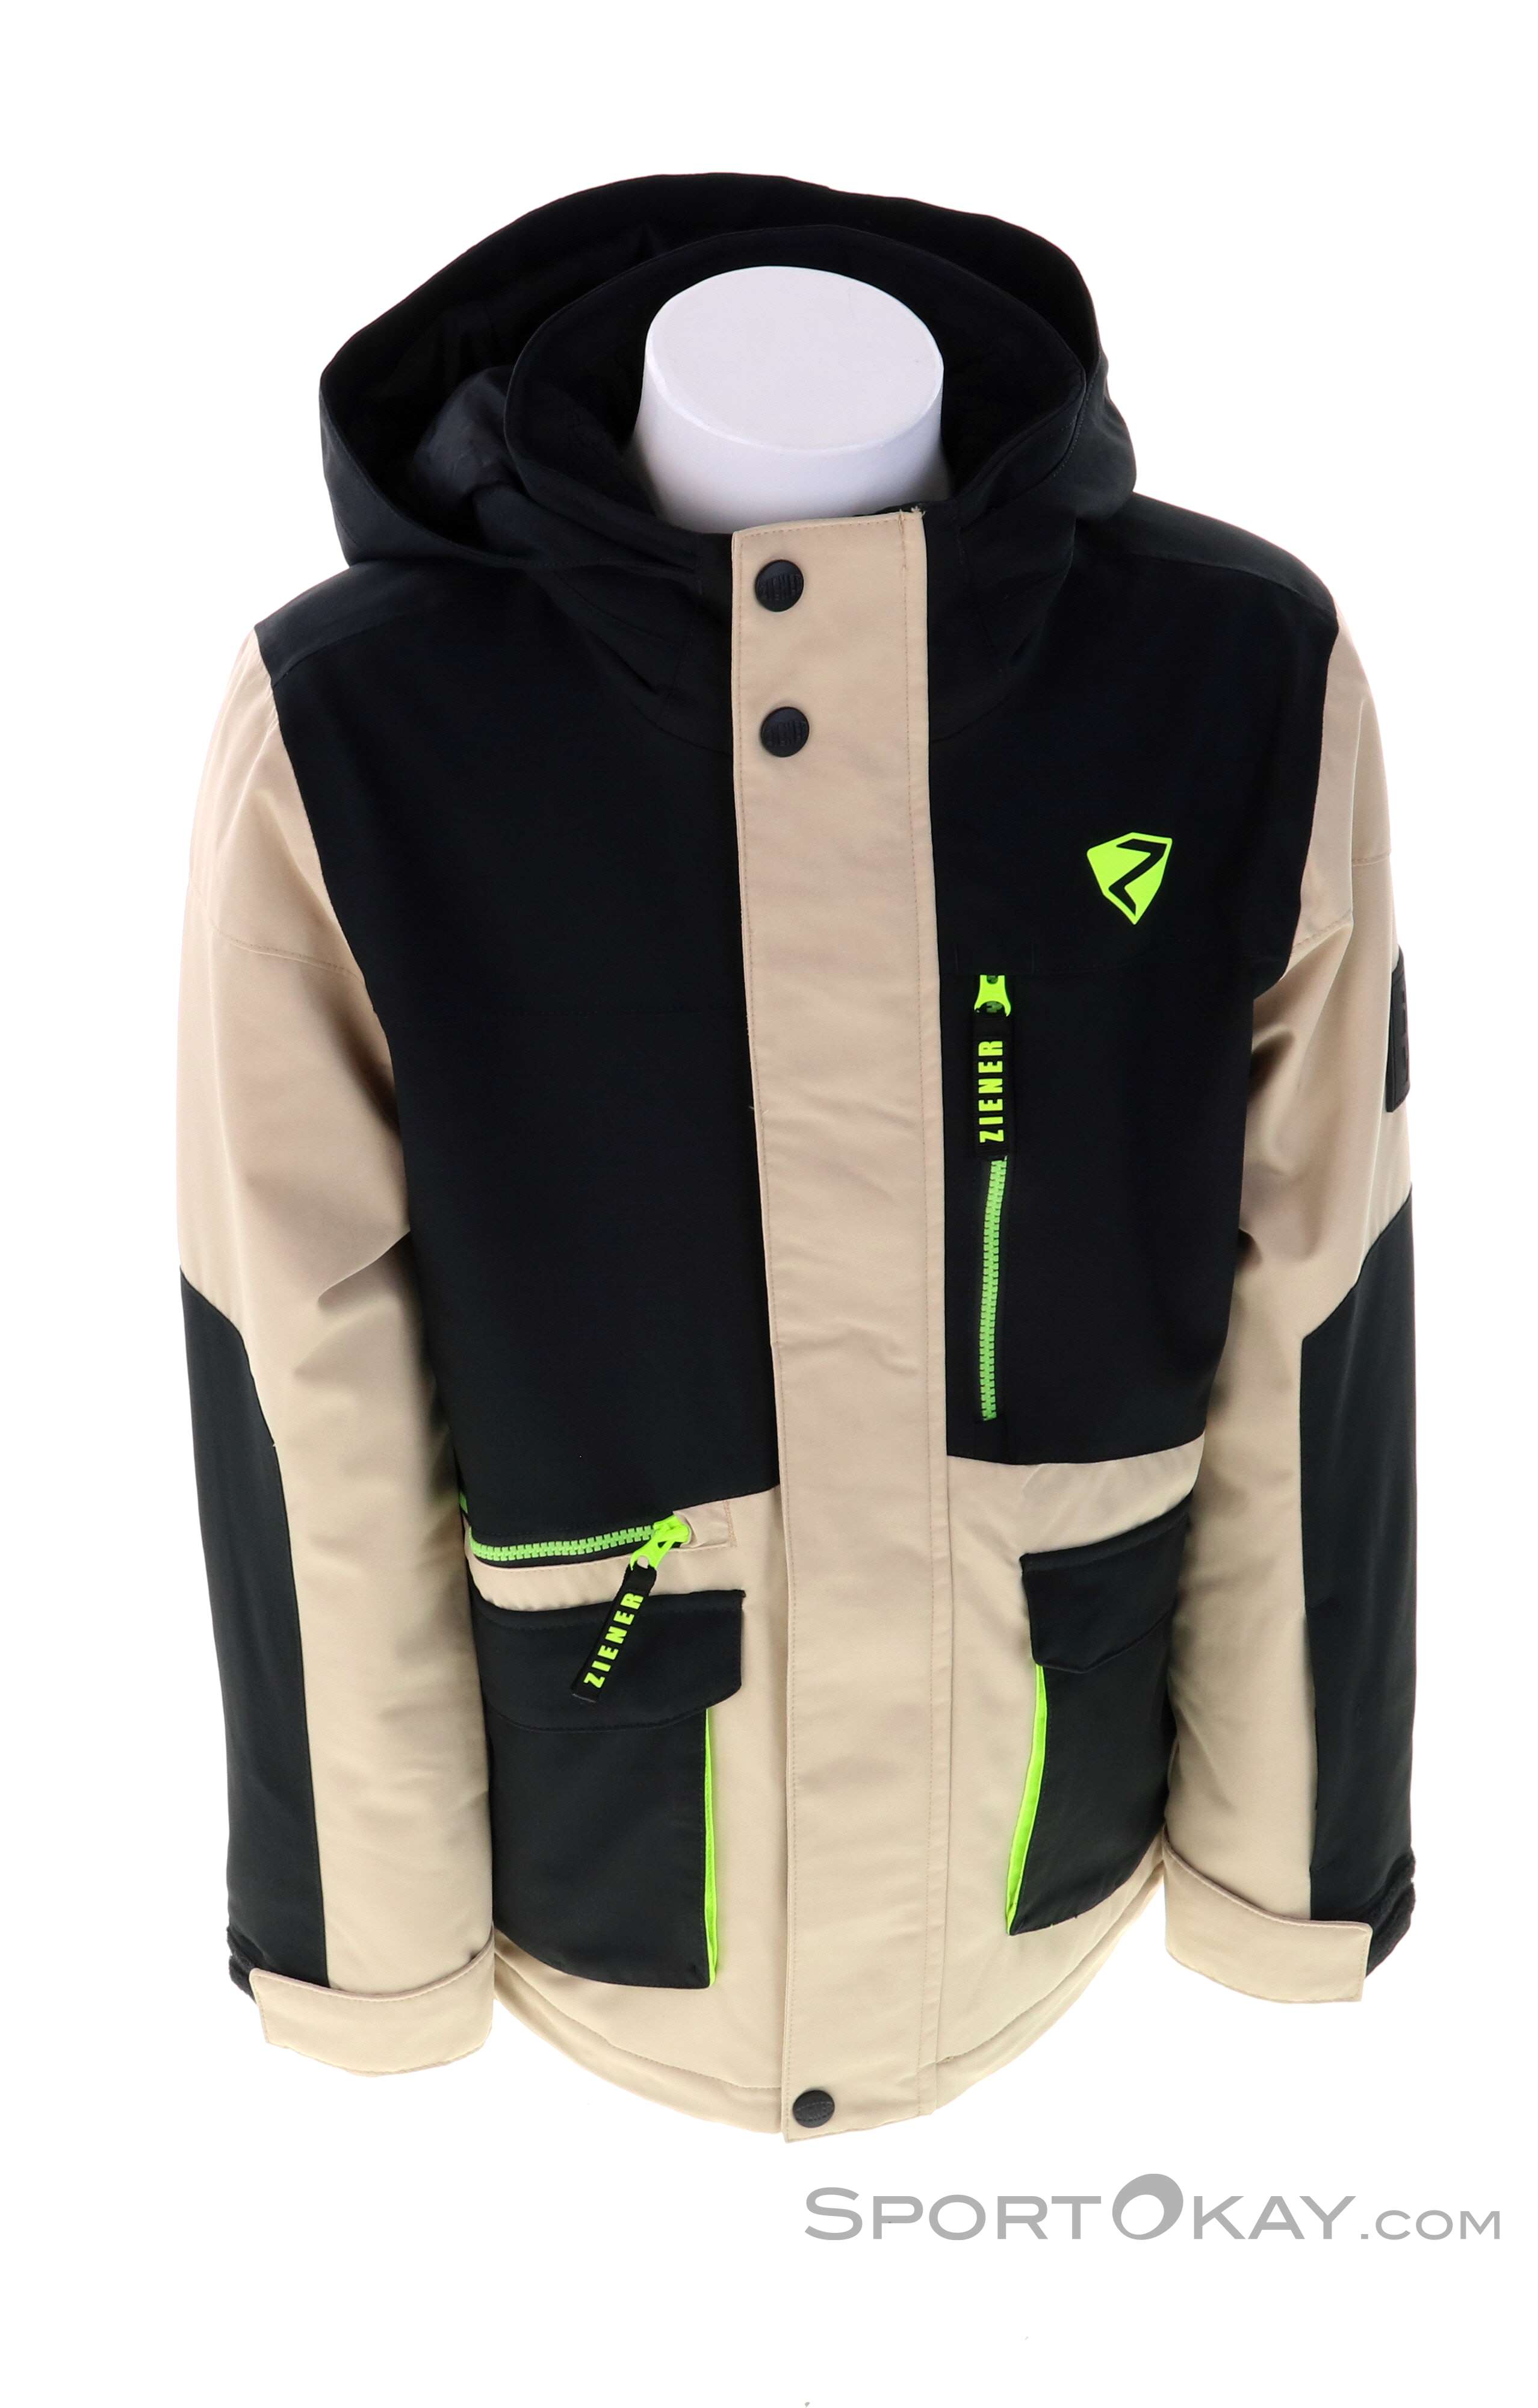 All Ski Ziener Ski Kids Jacket - Ski Clothing Jackets - & - Agonis Ski Freeride -